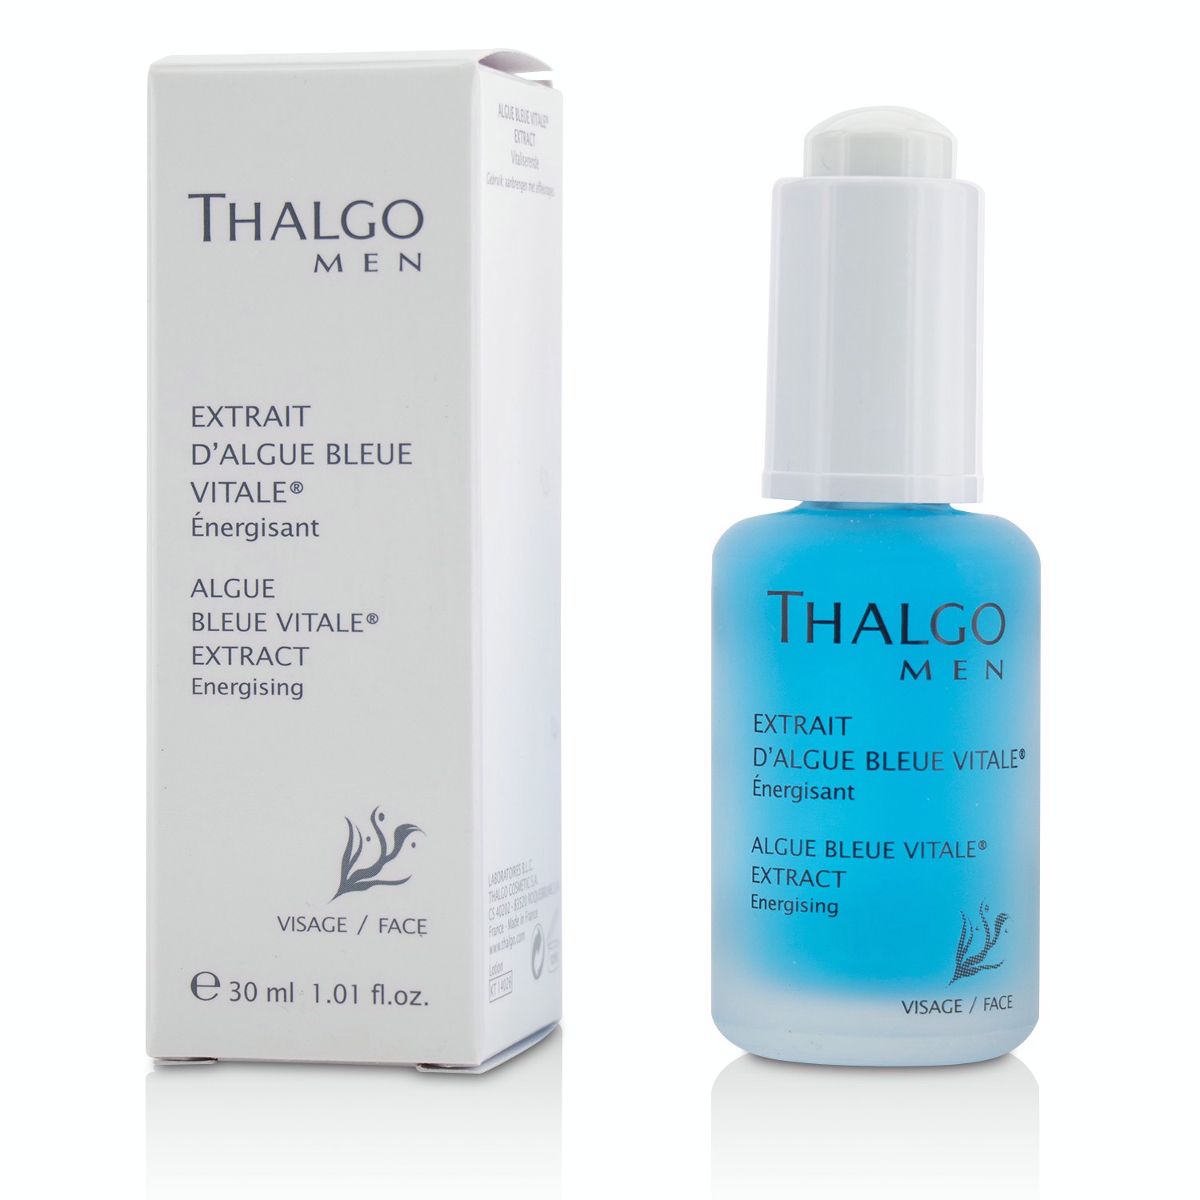 Thalgomen Algue Bleue Vitale Energising For Face (Salon Product) Thalgo Image